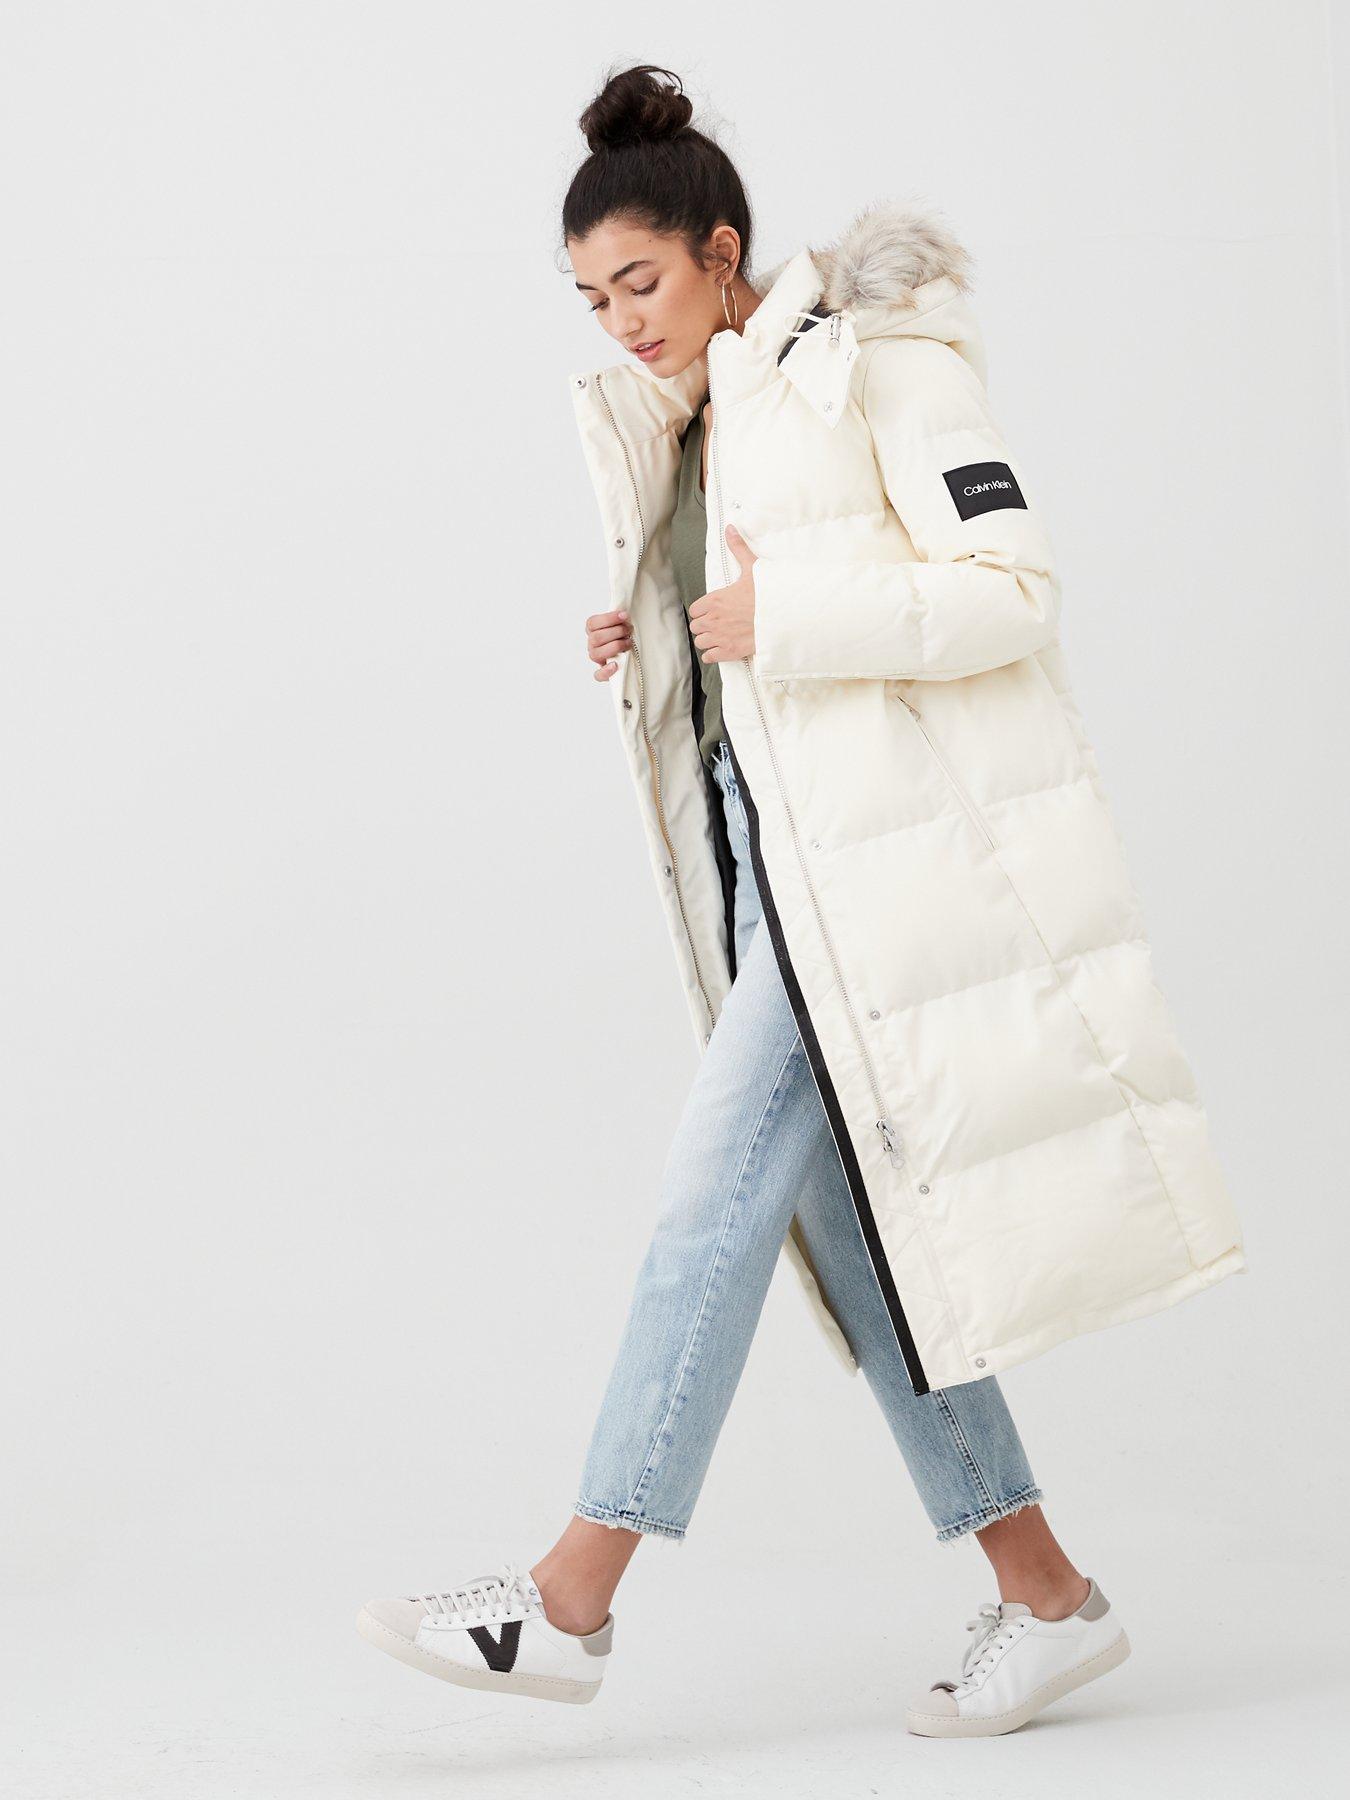 Calvin Klein Women's White Coat Flash Sales, SAVE 39% 